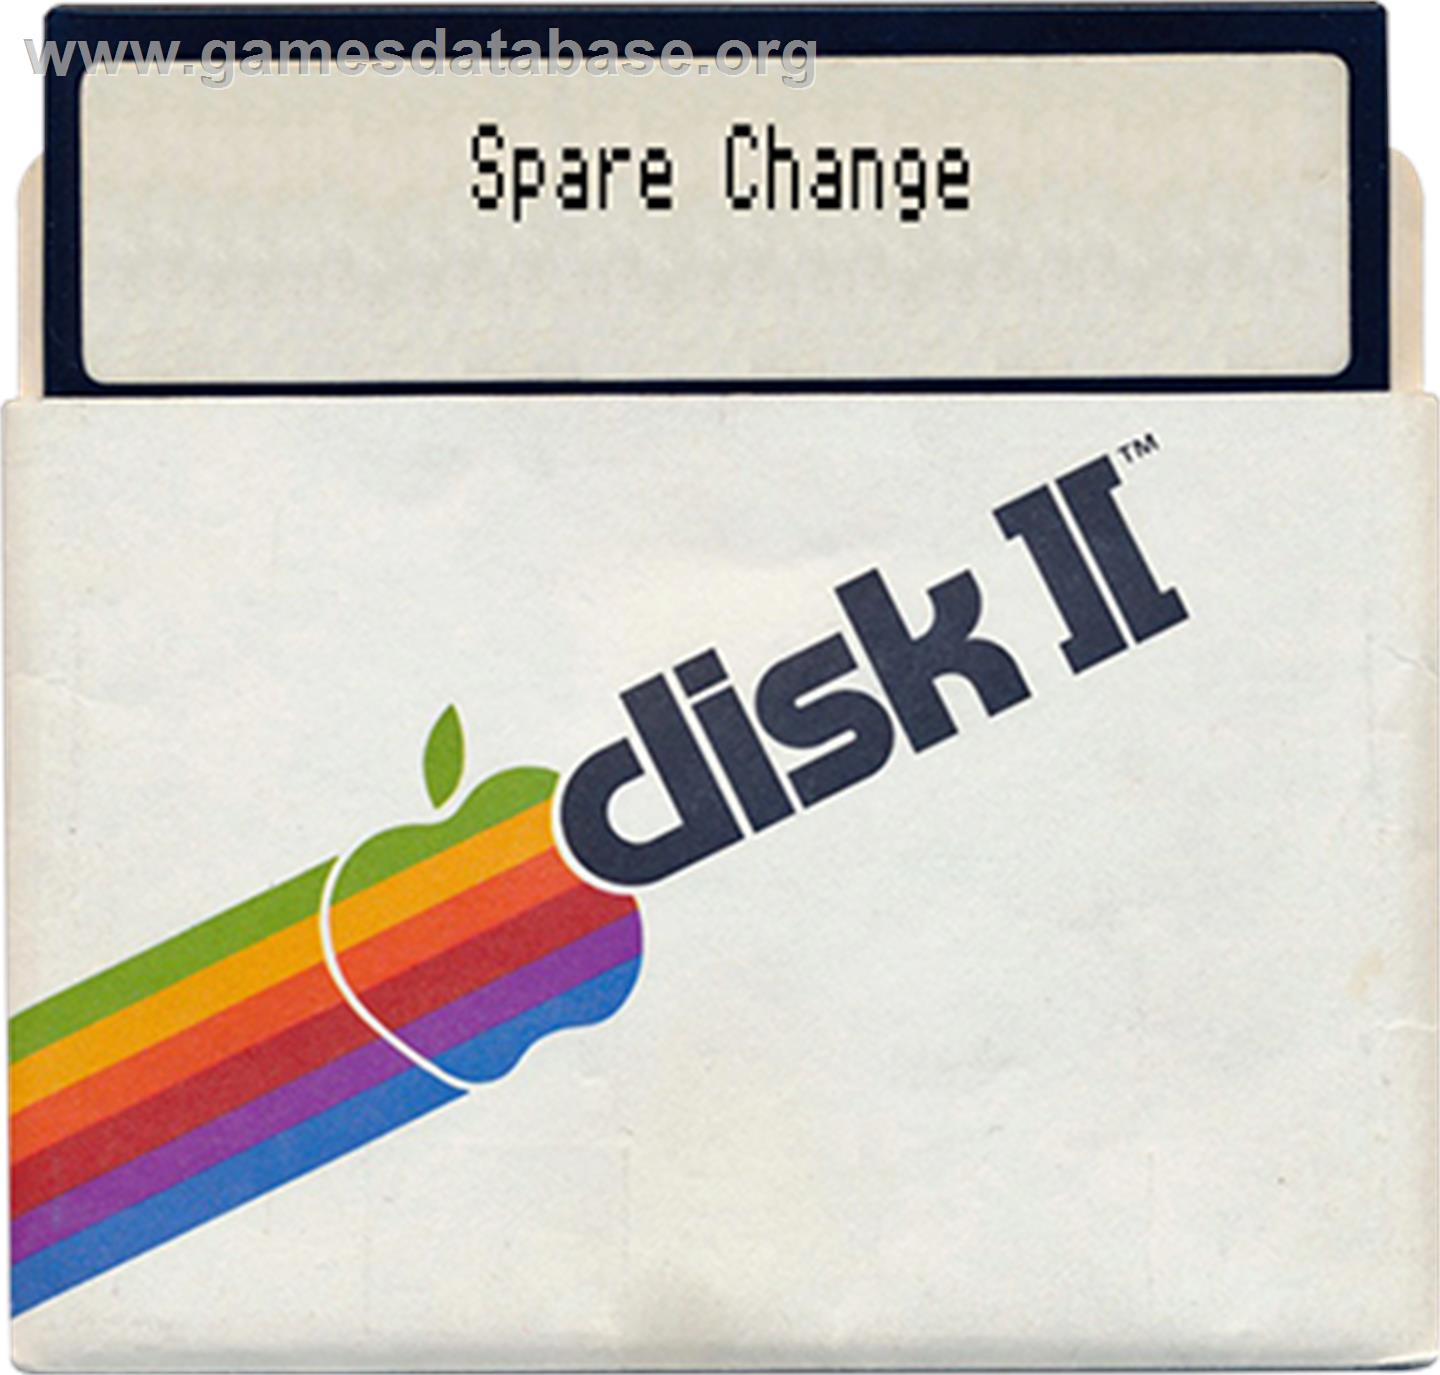 Spare Change - Apple II - Artwork - Disc